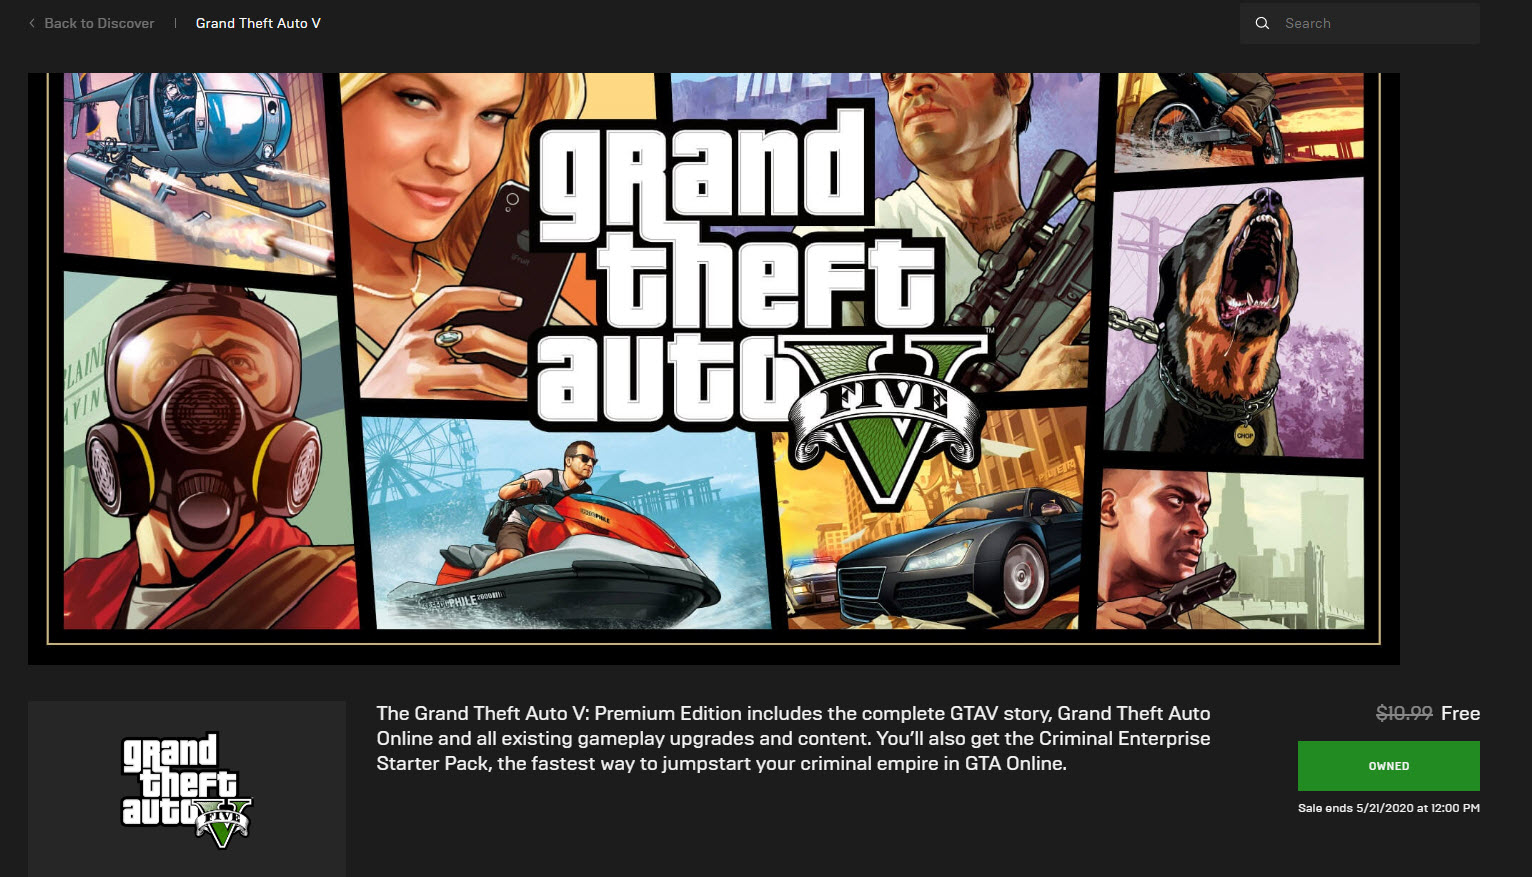 Epic games код 134. ГТА 5 премиум. Grand Theft auto v Epic games. ГТА 5 премиум эдишн. ГТА 5 ЭПИК геймс.